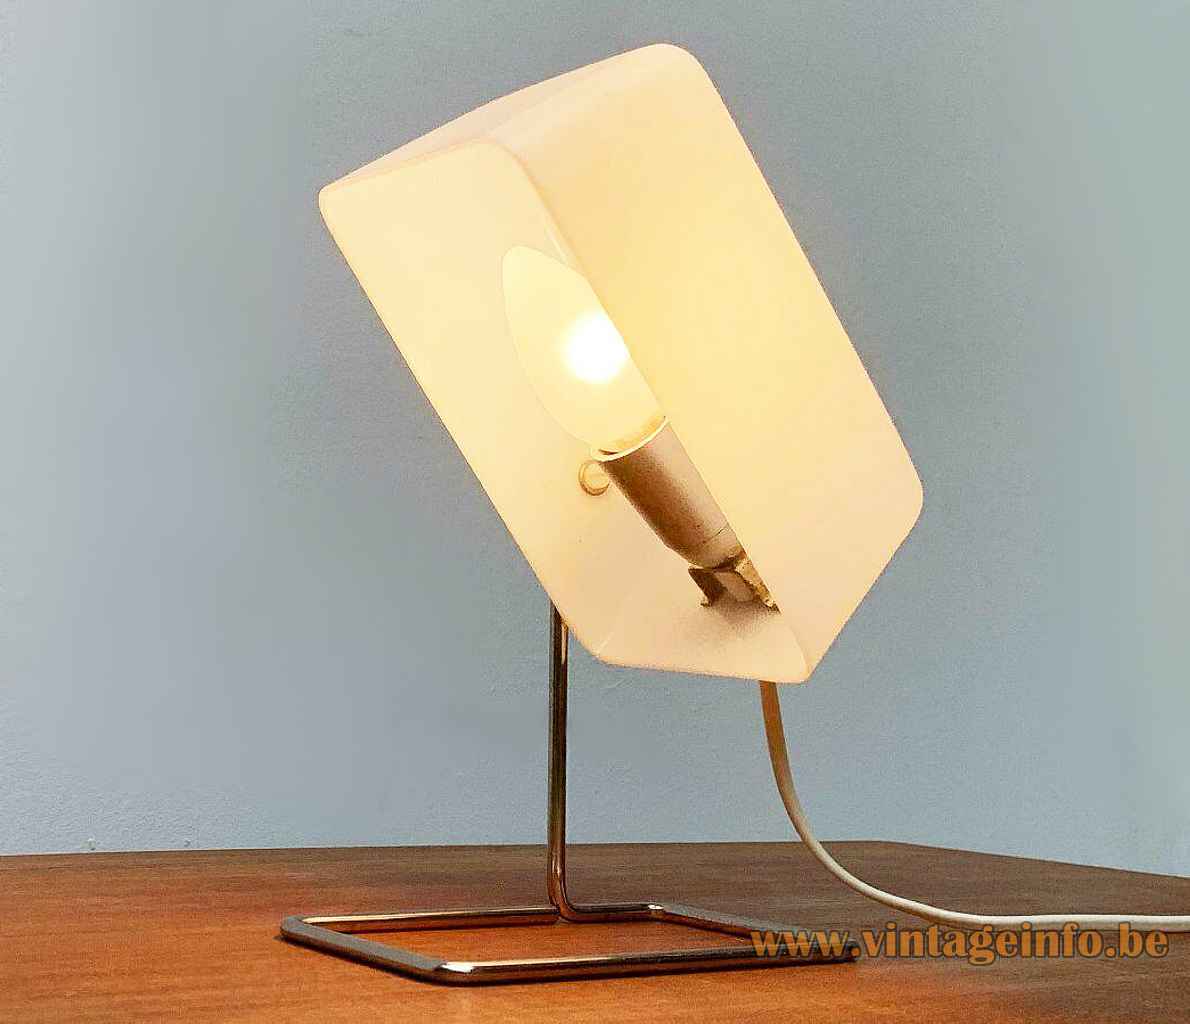 Temde white acrylic desk lamp rectangular chrome rod base white plastic frustum lampshade 1960s 1970s Germany 